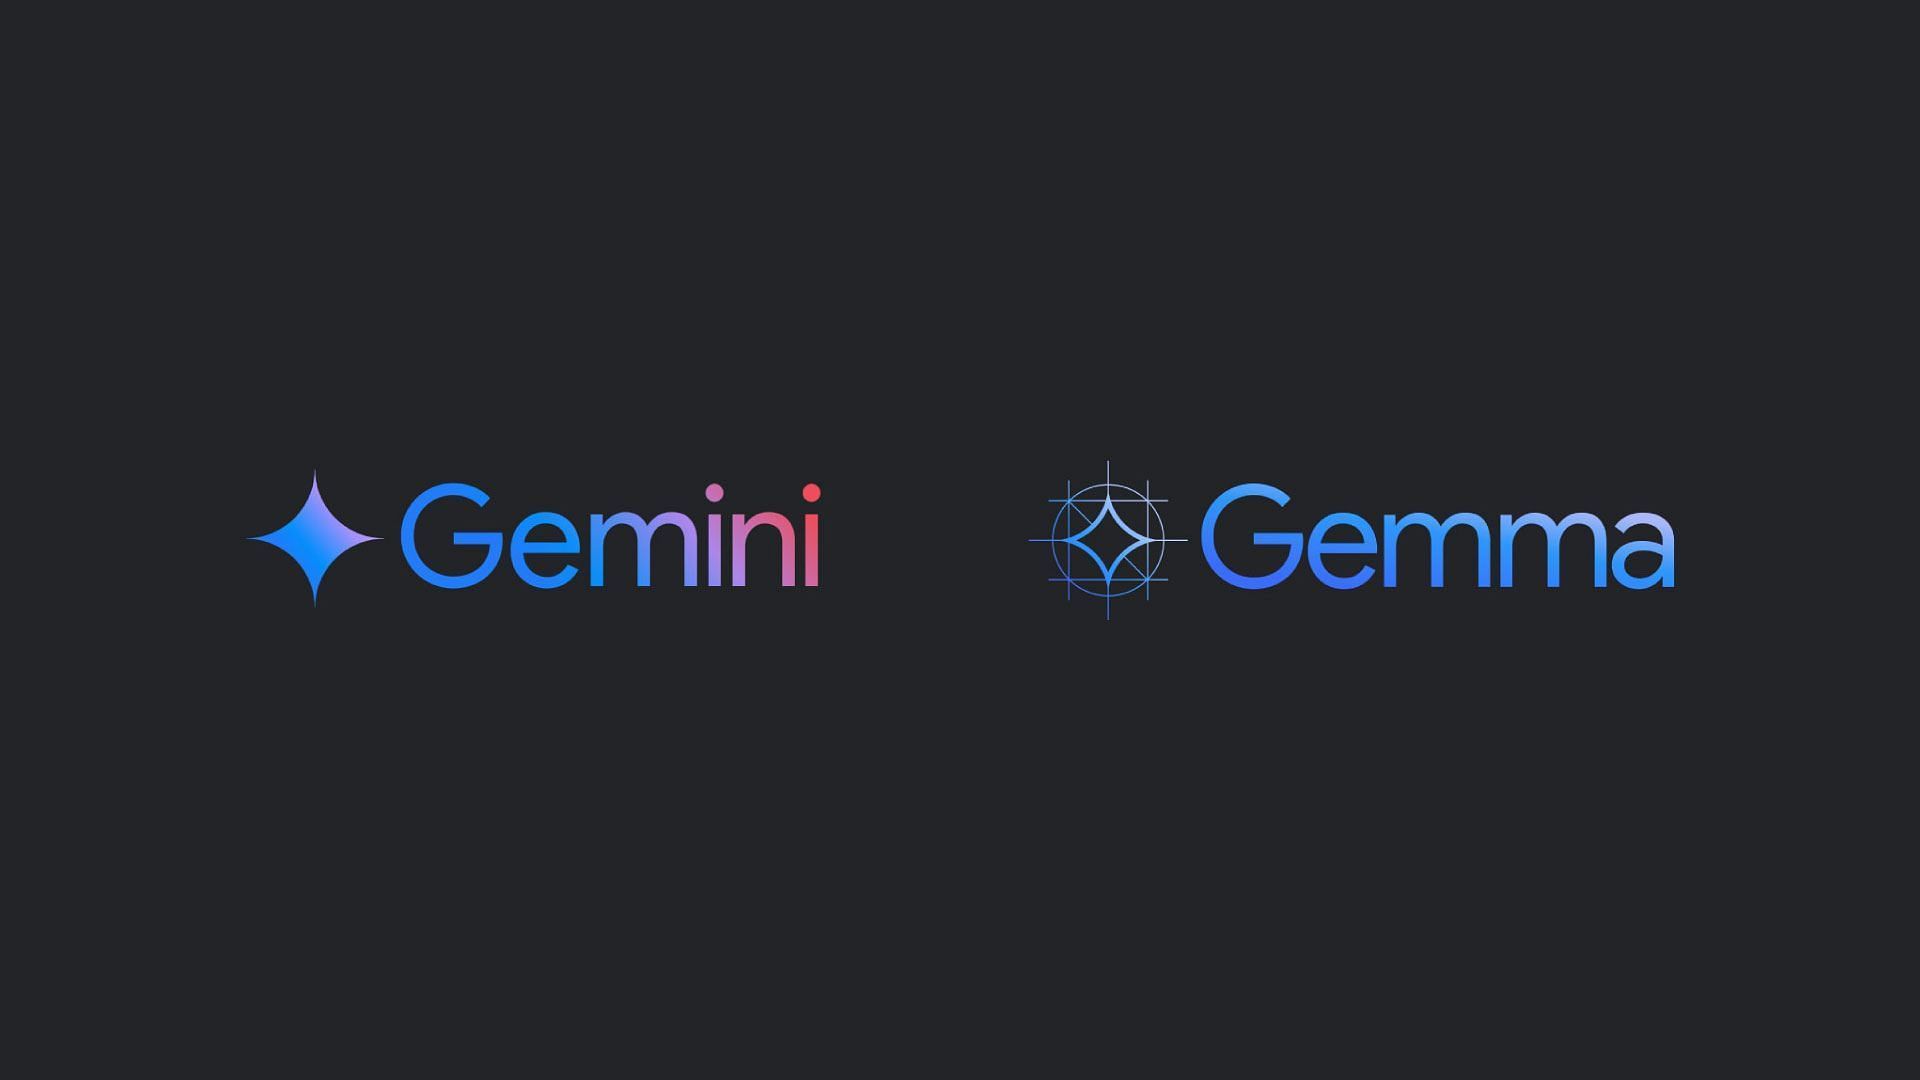 The new Gemini 1.5 Flash (Image via Twitter/Google)